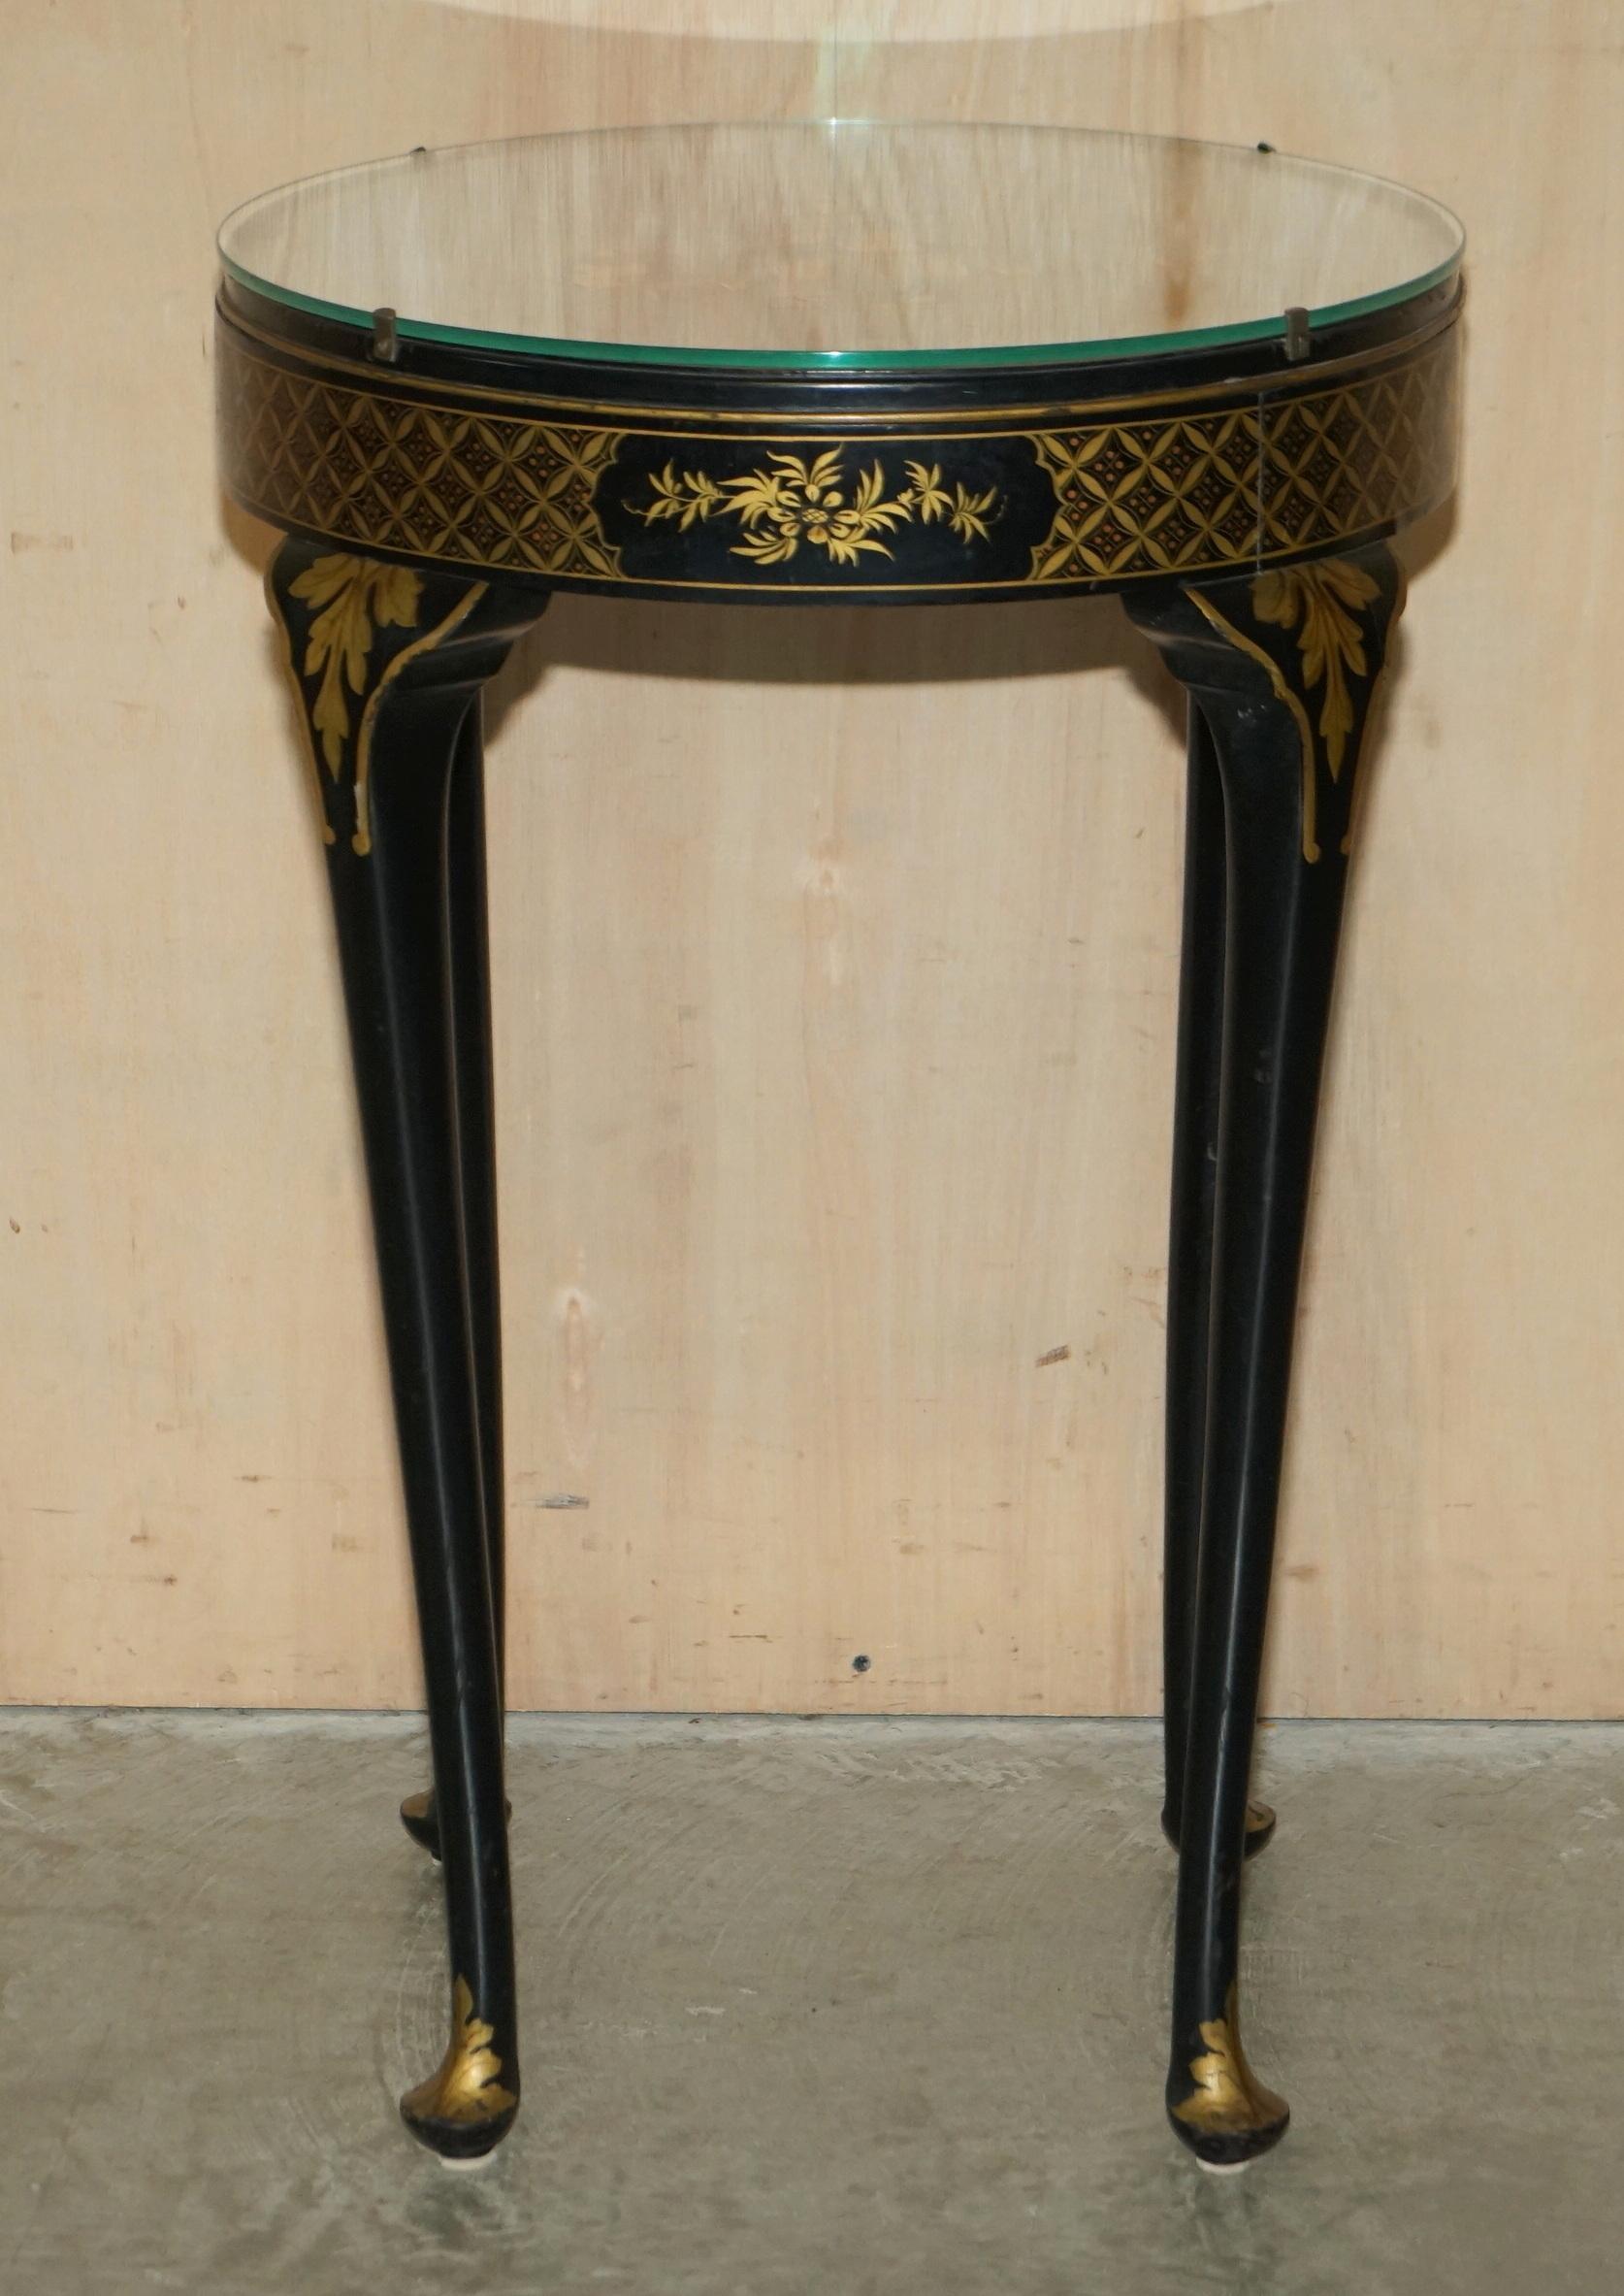 Chinoiseries Ancienne lampe d'appoint victorienne laquée datant d'environ 1900, style chinoiserie en vente